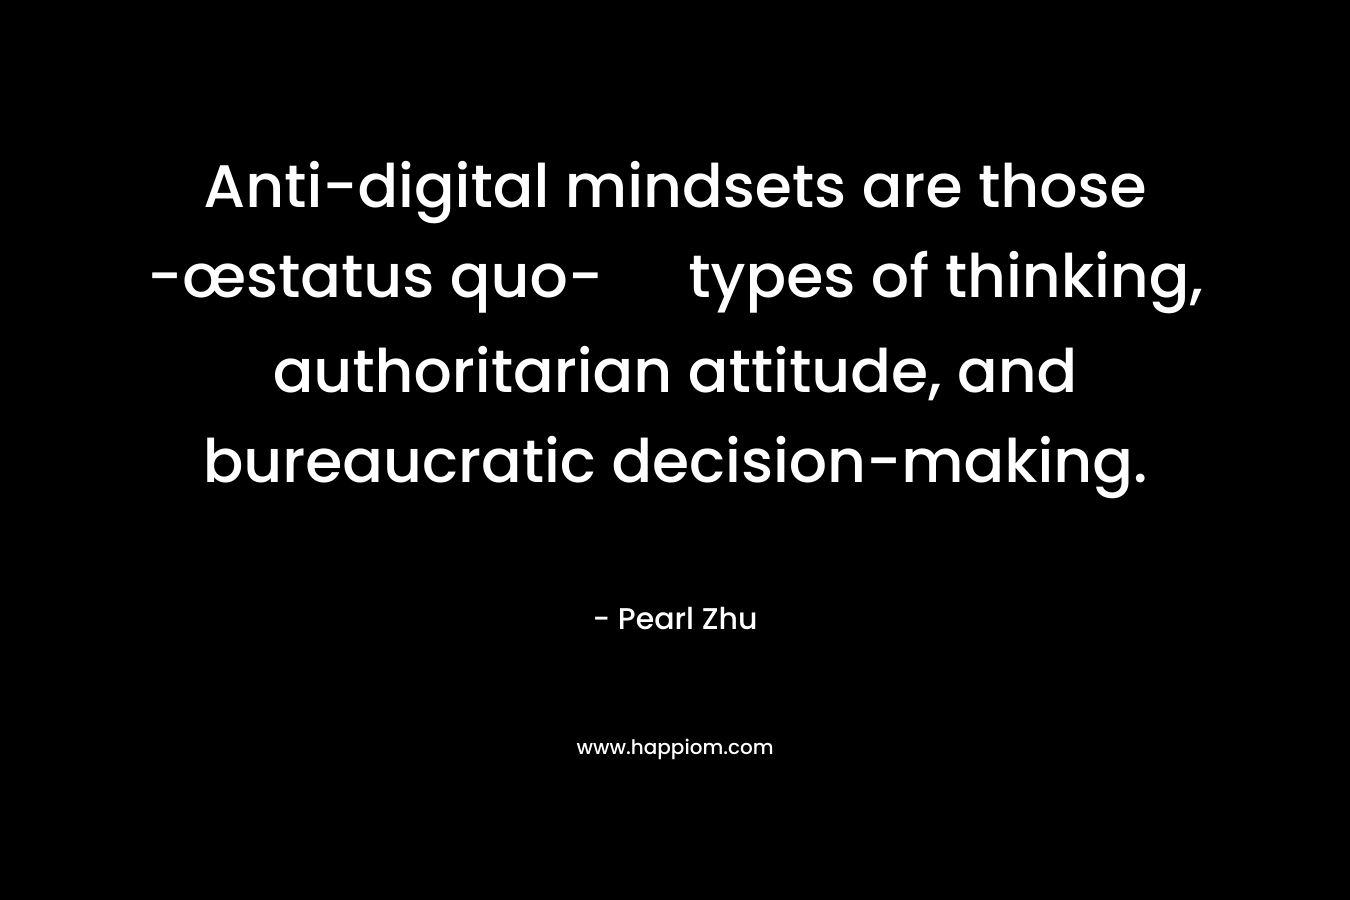 Anti-digital mindsets are those -œstatus quo- types of thinking, authoritarian attitude, and bureaucratic decision-making. – Pearl Zhu